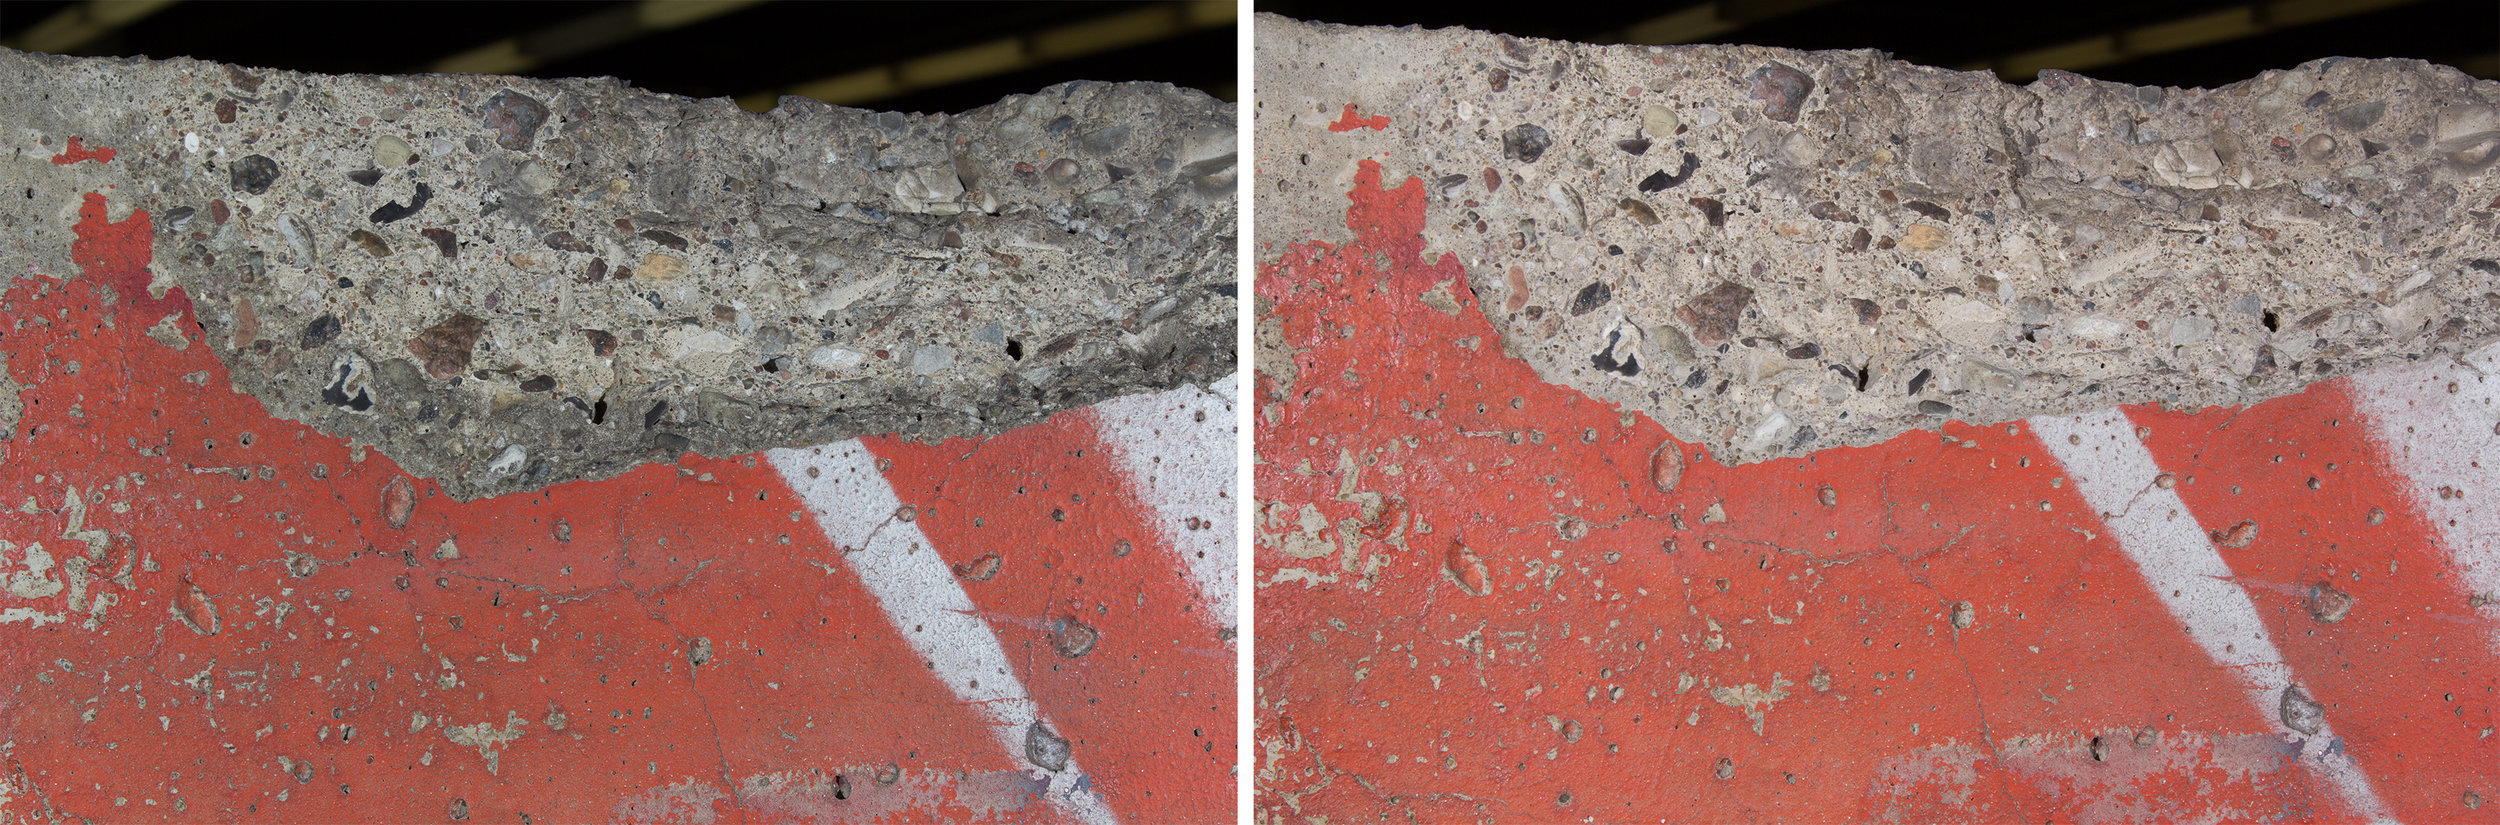  (Detail). Before cleaning (left), After cleaning (right).    
  
 
  
    
  
 Normal 
 0 
 
 
 
 
 false 
 false 
 false 
 
 EN-US 
 JA 
 X-NONE 
 
  
  
  
  
  
  
  
  
  
  
 
 
  
  
  
  
  
  
  
  
  
  
  
  
    
  
 
 
 
 
 
 
 
 
 
 
 
